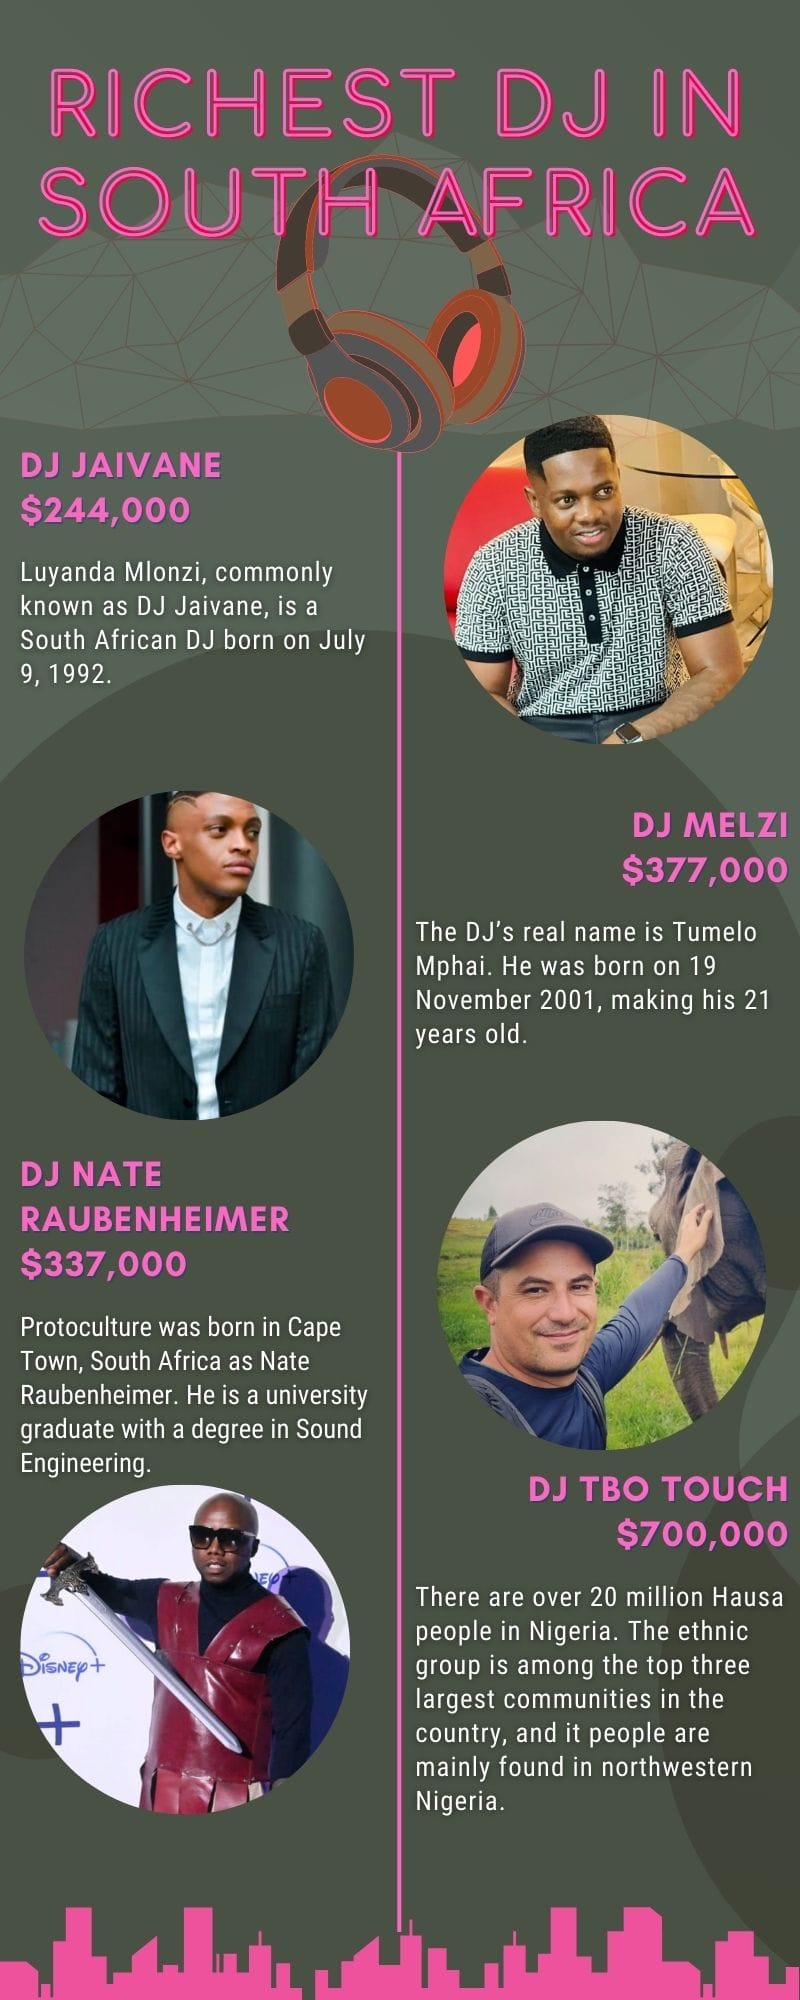 Richest DJ in South Africa